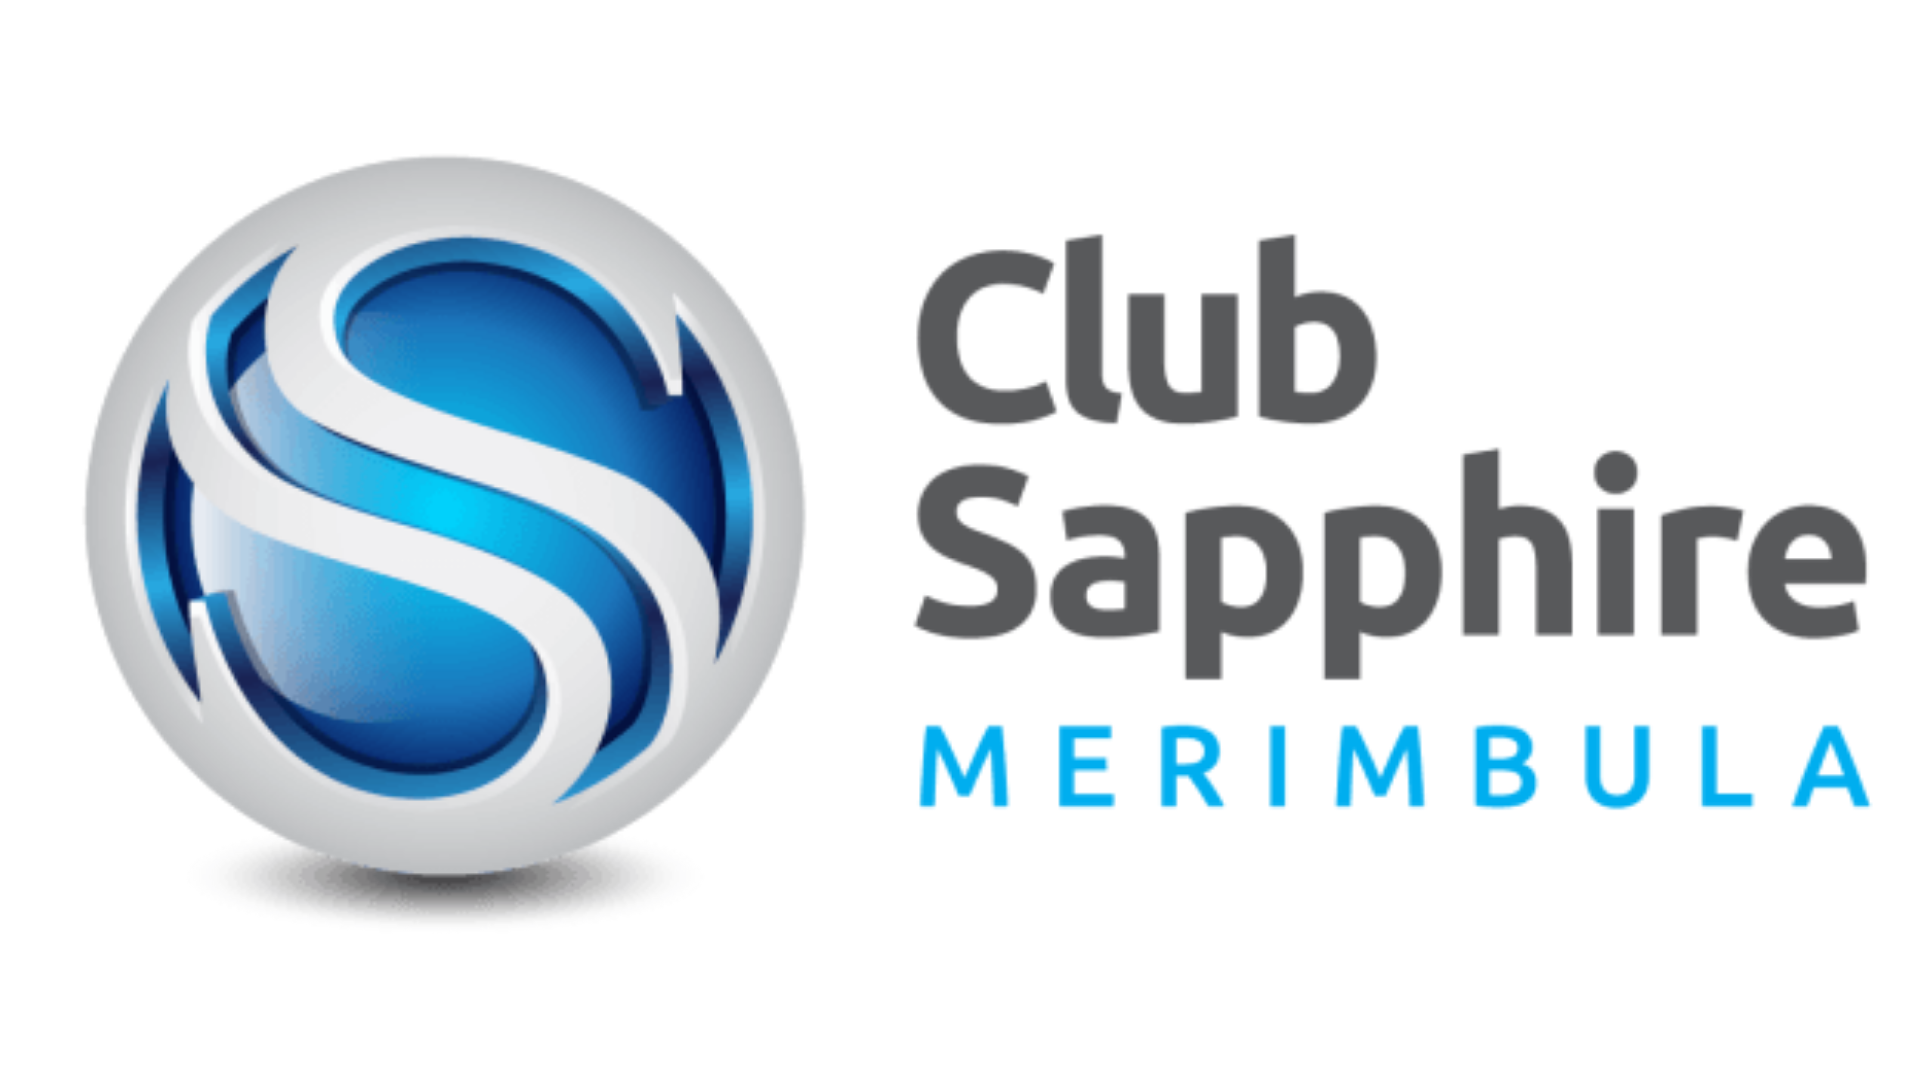 Club Sapphire